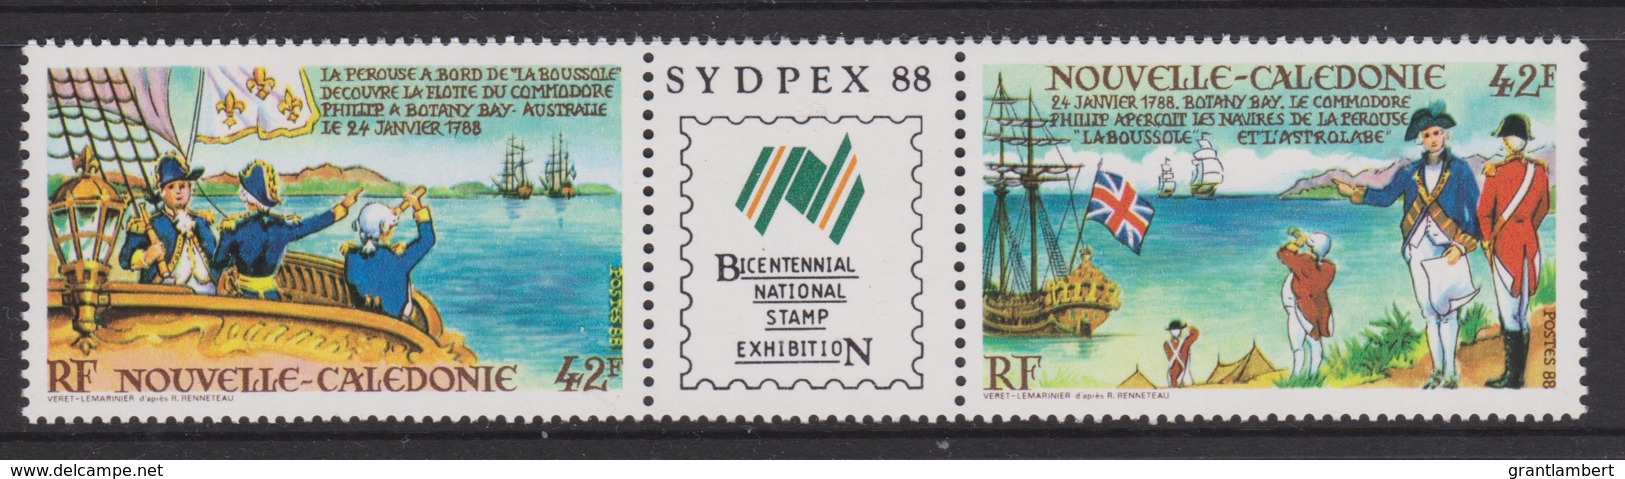 New Caledonia 1988 SYDPEX 88 Exhibition Set Of 2 MNH  SG 834, 835 - Nuevos